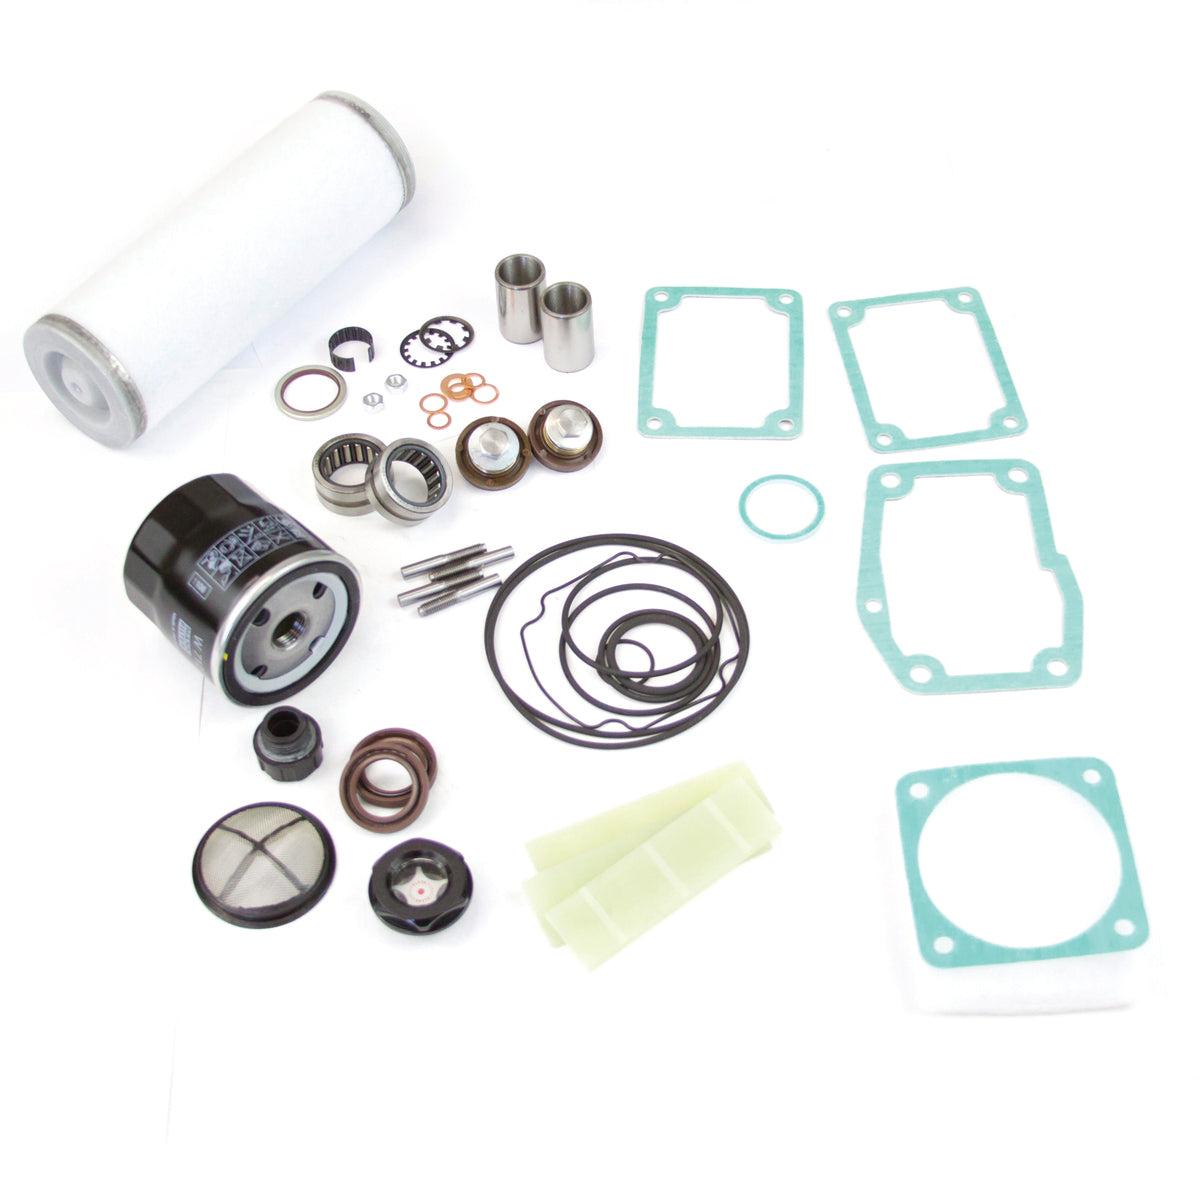 Major Repair Kit with GX Vanes & Filters - Busch 0025 B, BMKF005